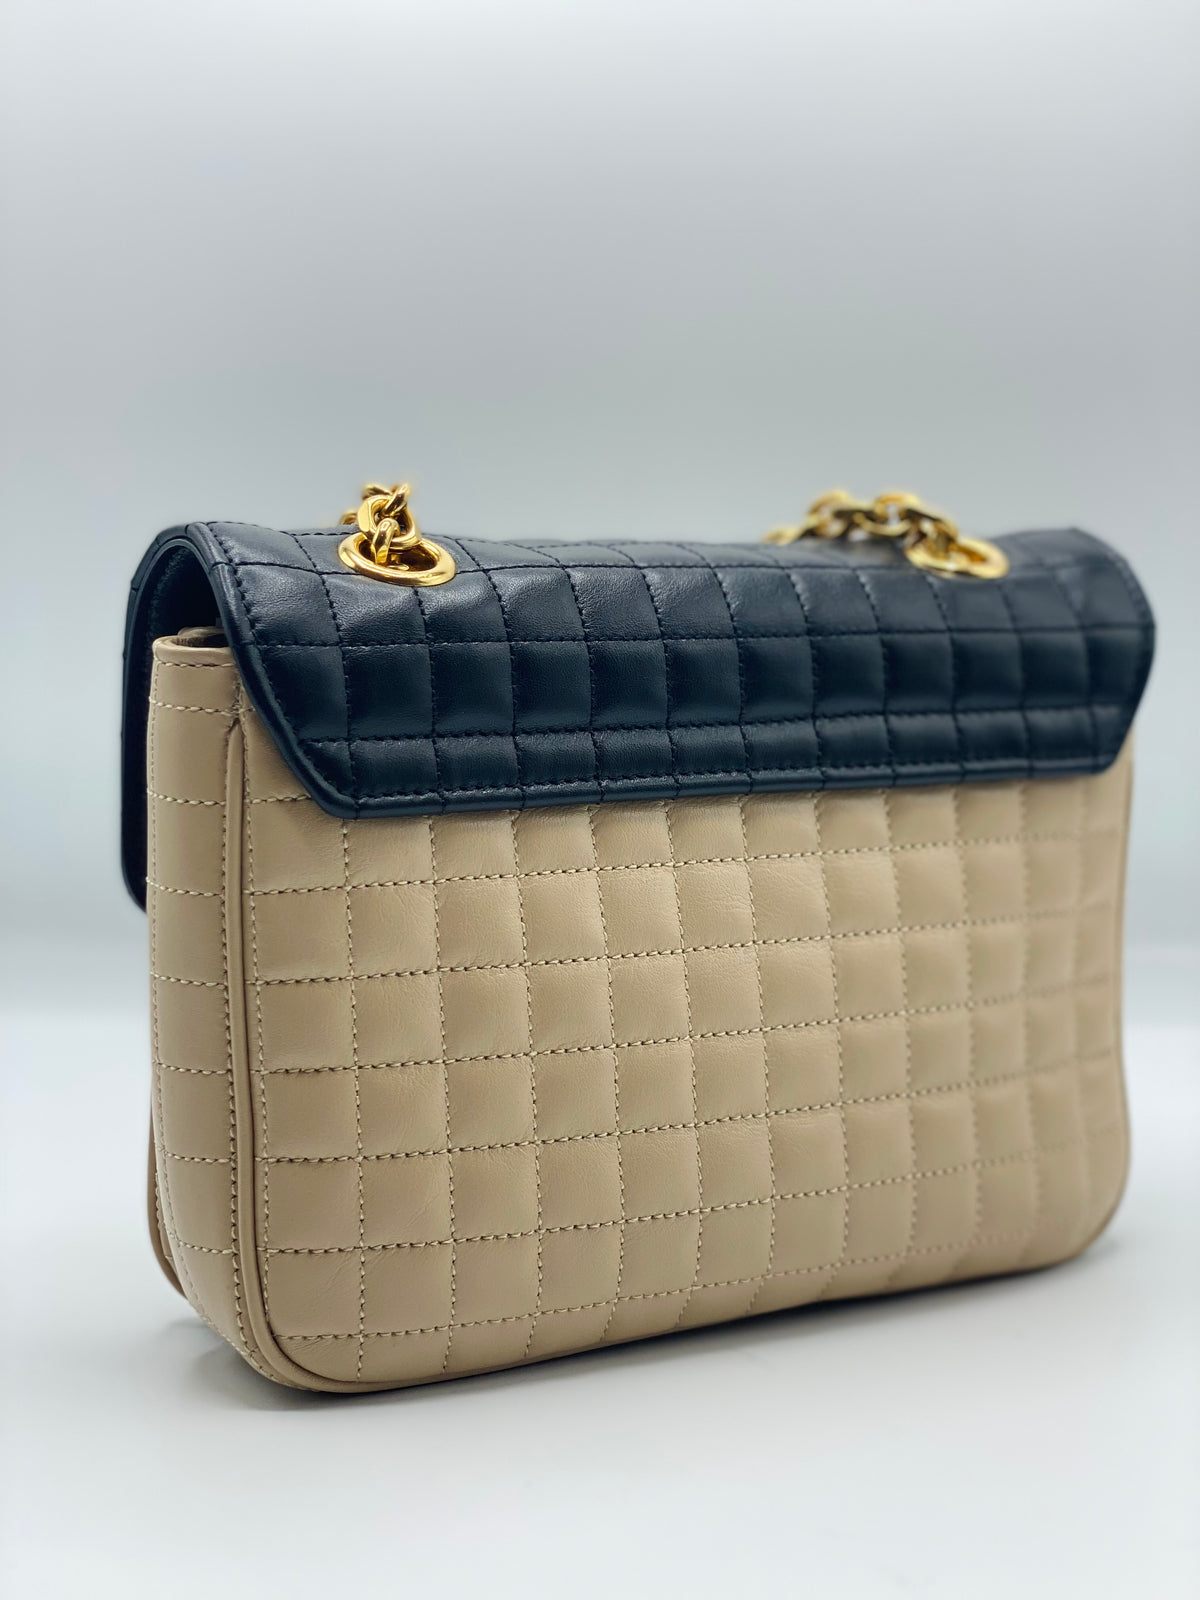 CELINE |  Two Tone Quilted Calfskin Leather "C" Shoulder Bag